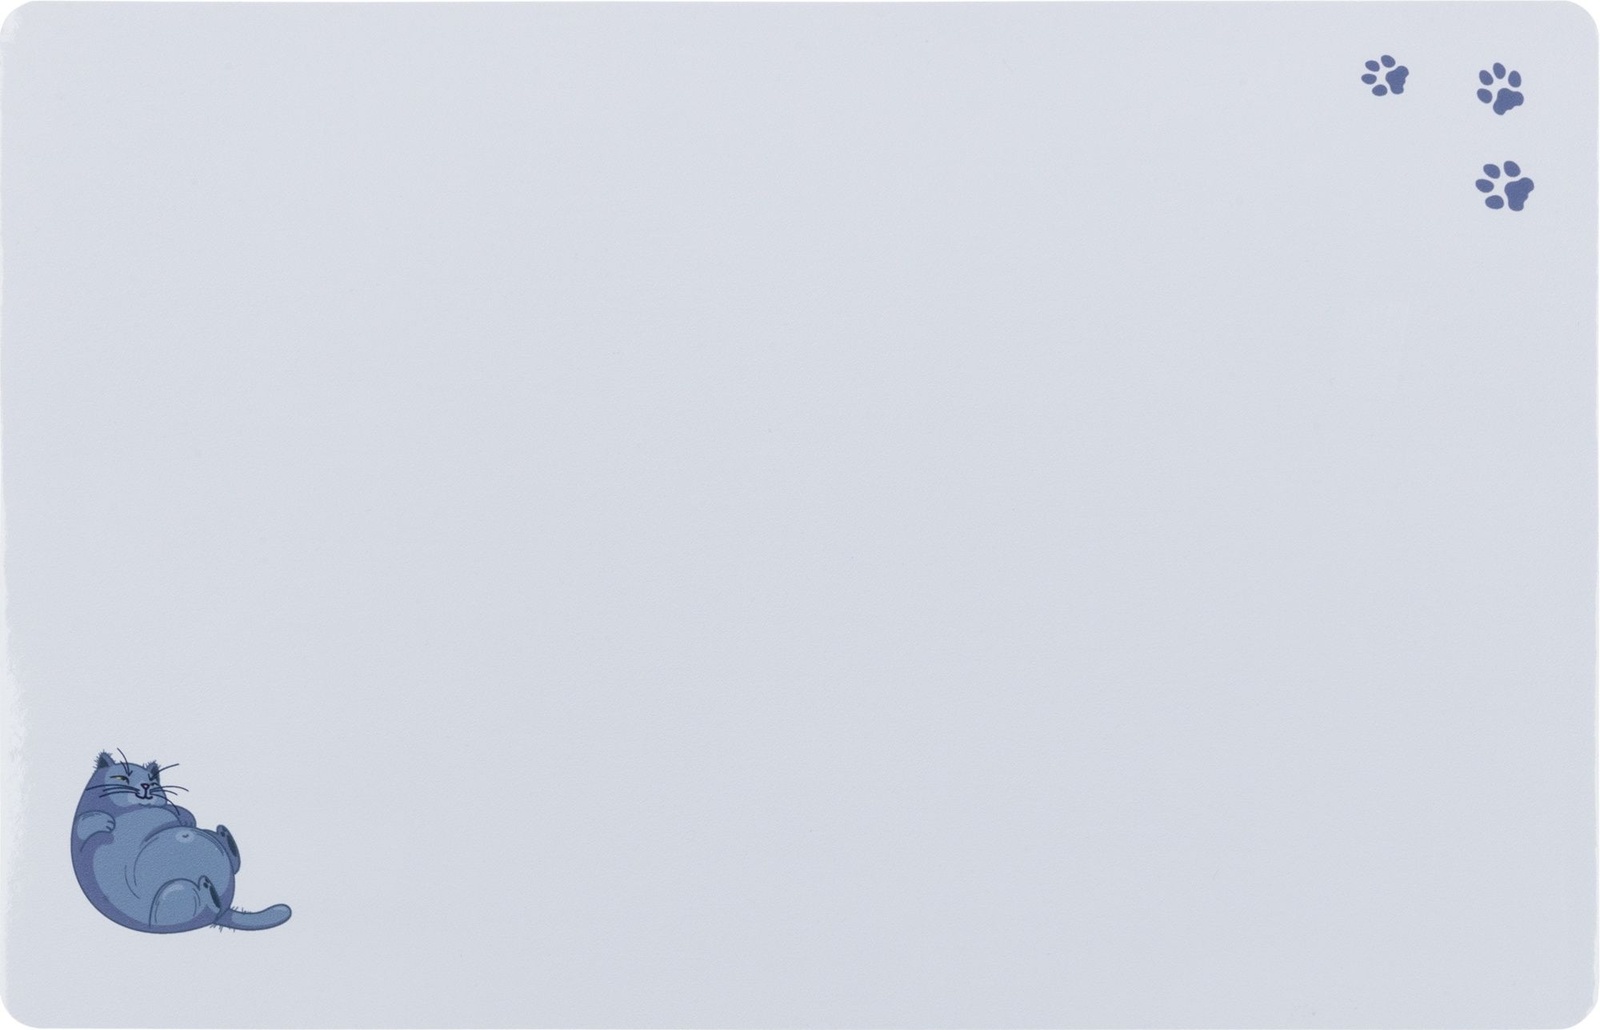 Trixie Trixie коврик под миску с рисунком Толстый кот/лапки, 44 x 28 см, серый (80 г) коврик под миску trixie для кошек 44х28 см с кошкой